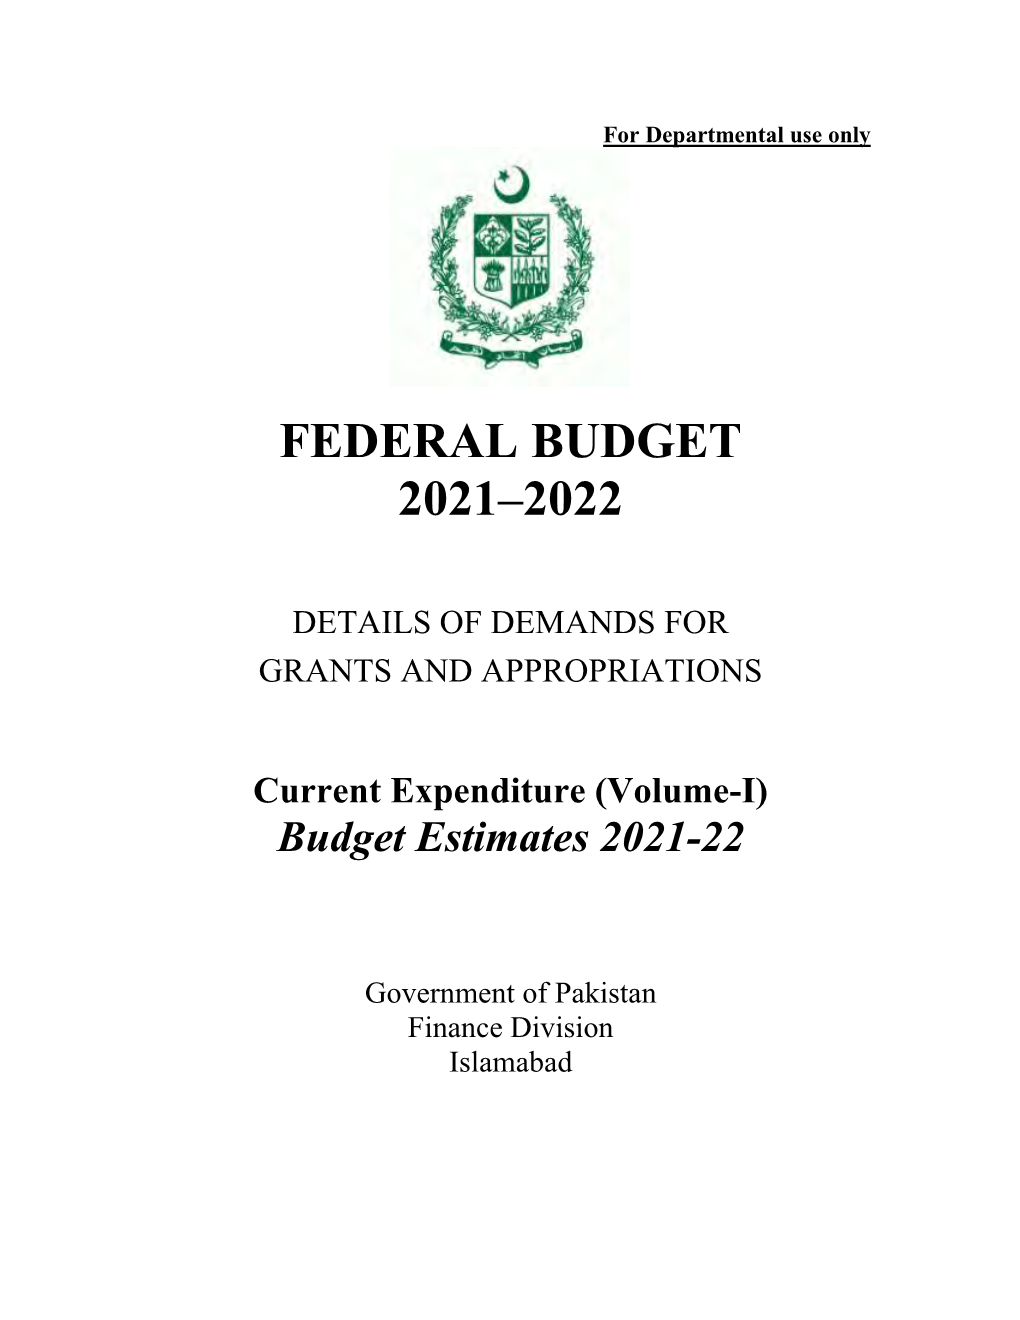 Budget Estimates 2021-22